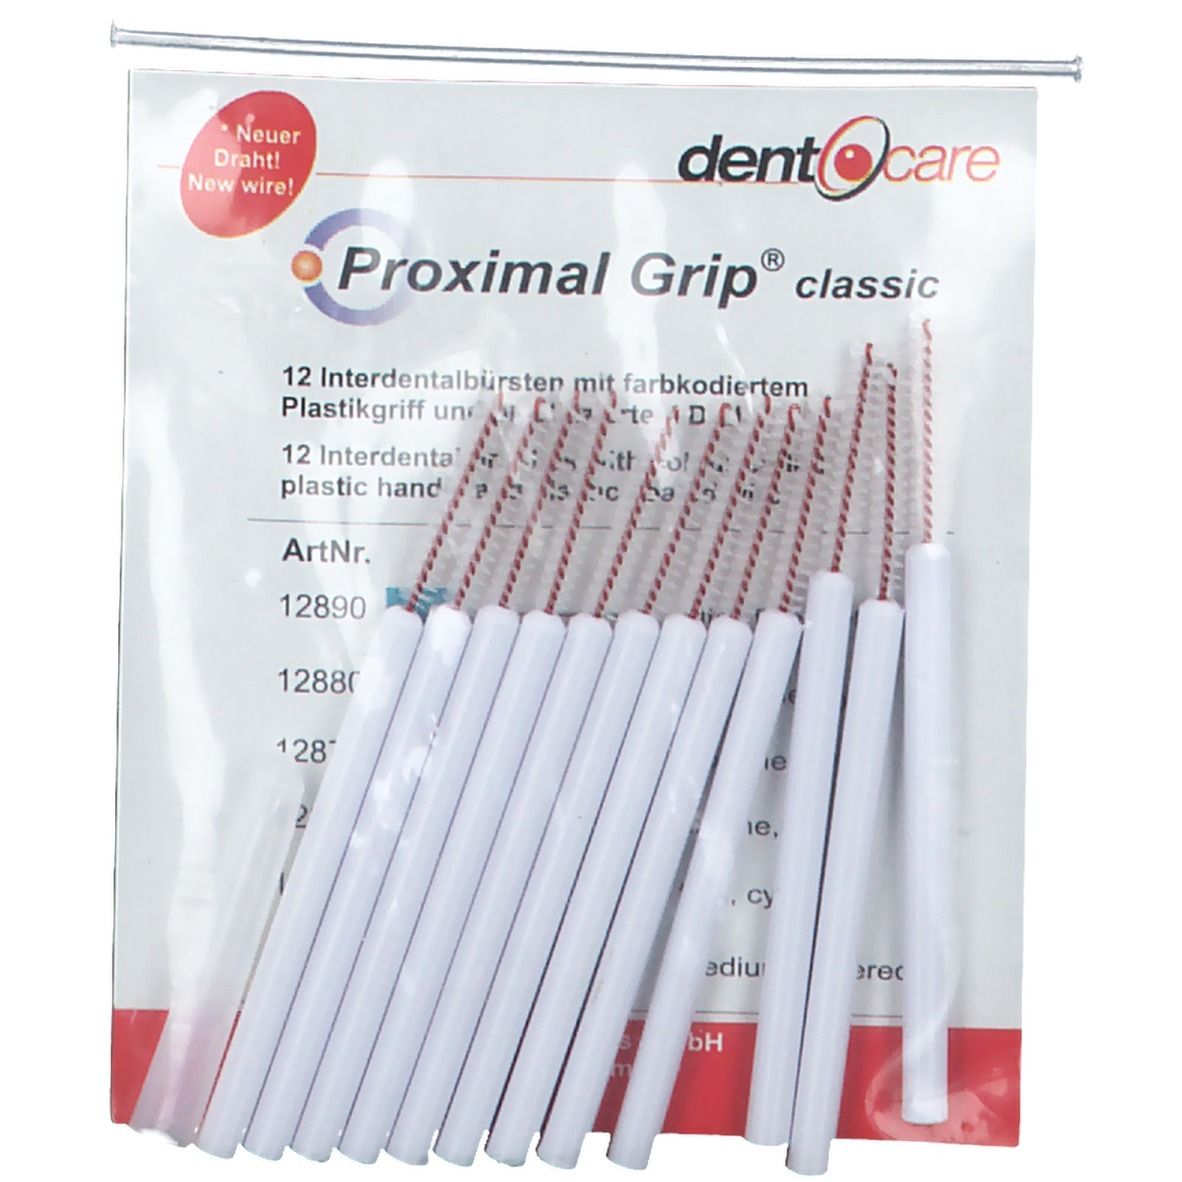 Dent-o-care Proximal Grip fein weiss Interdentalbürste 0,75 mm